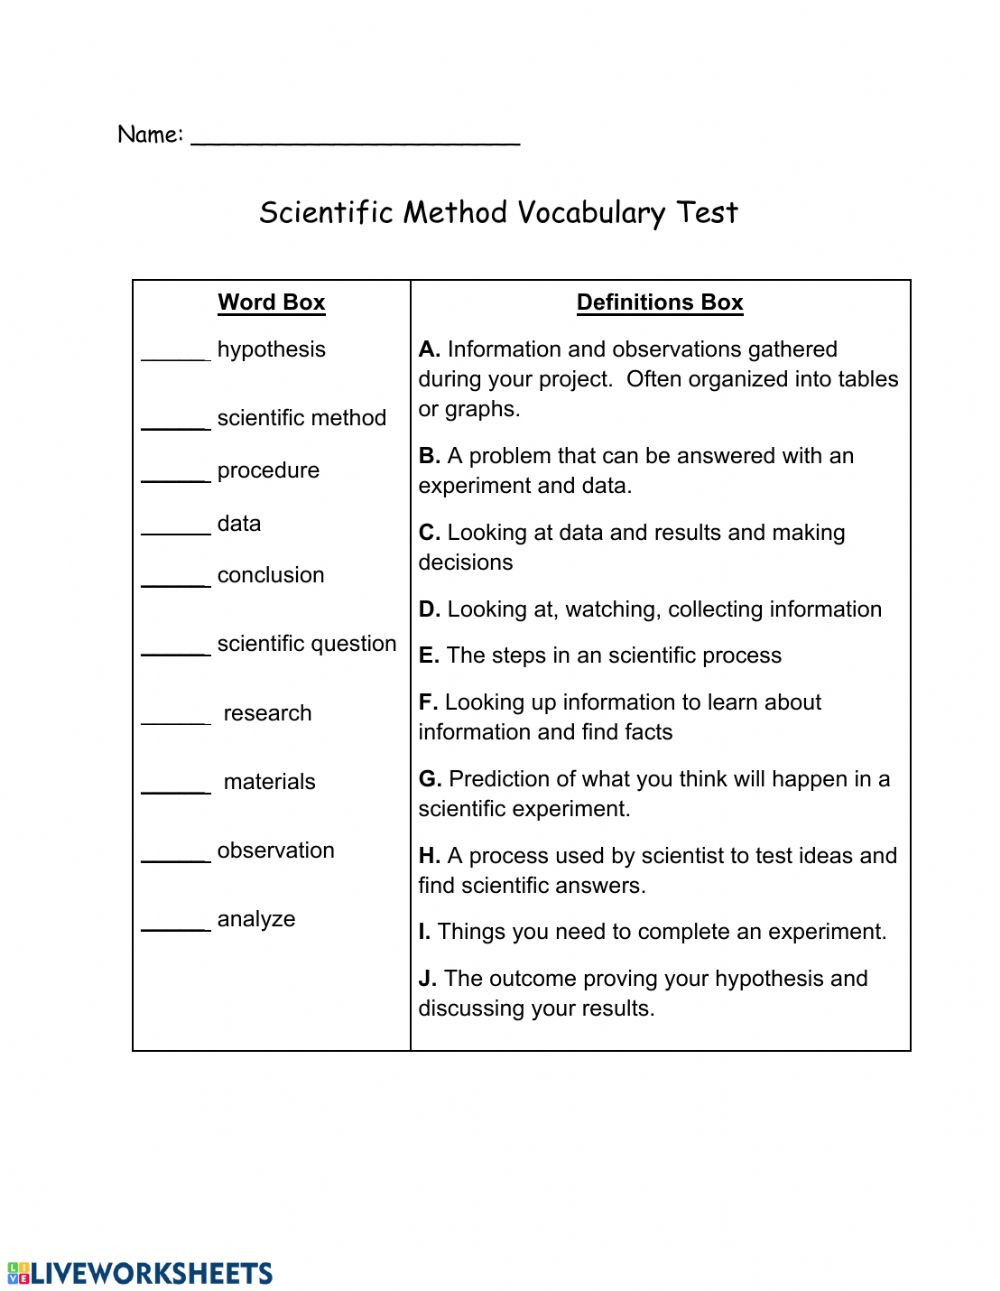 Scientific Method Worksheet Pdf Scientific Process Vocabulary Test Interactive Worksheet